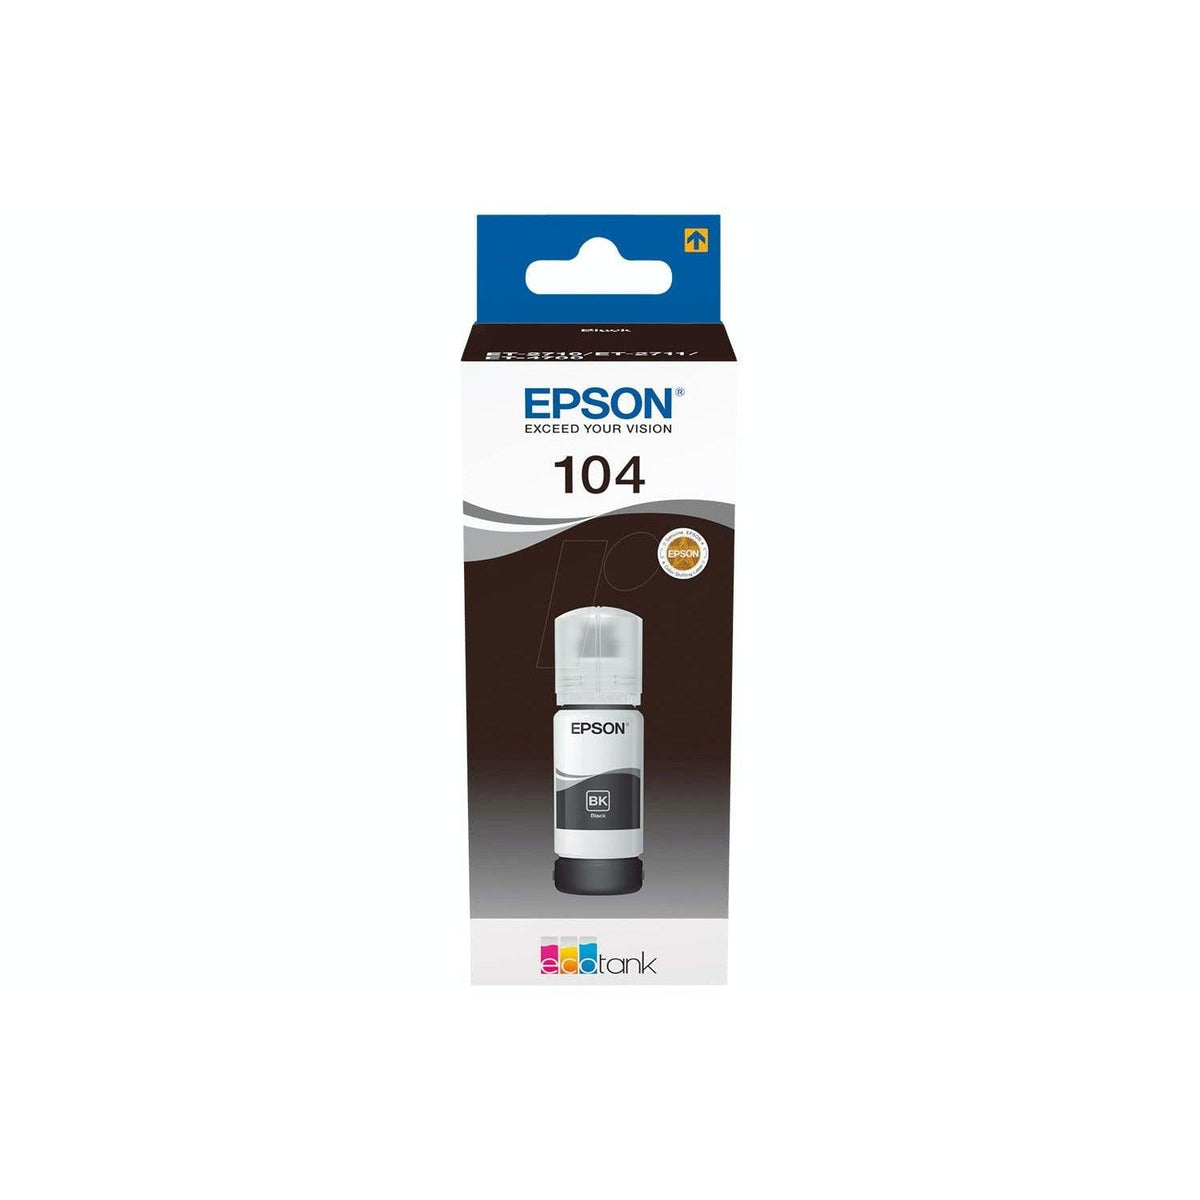 SEPS1430_Epson 104 EcoTank Ink Bottle - Black-1 (7424813531324)